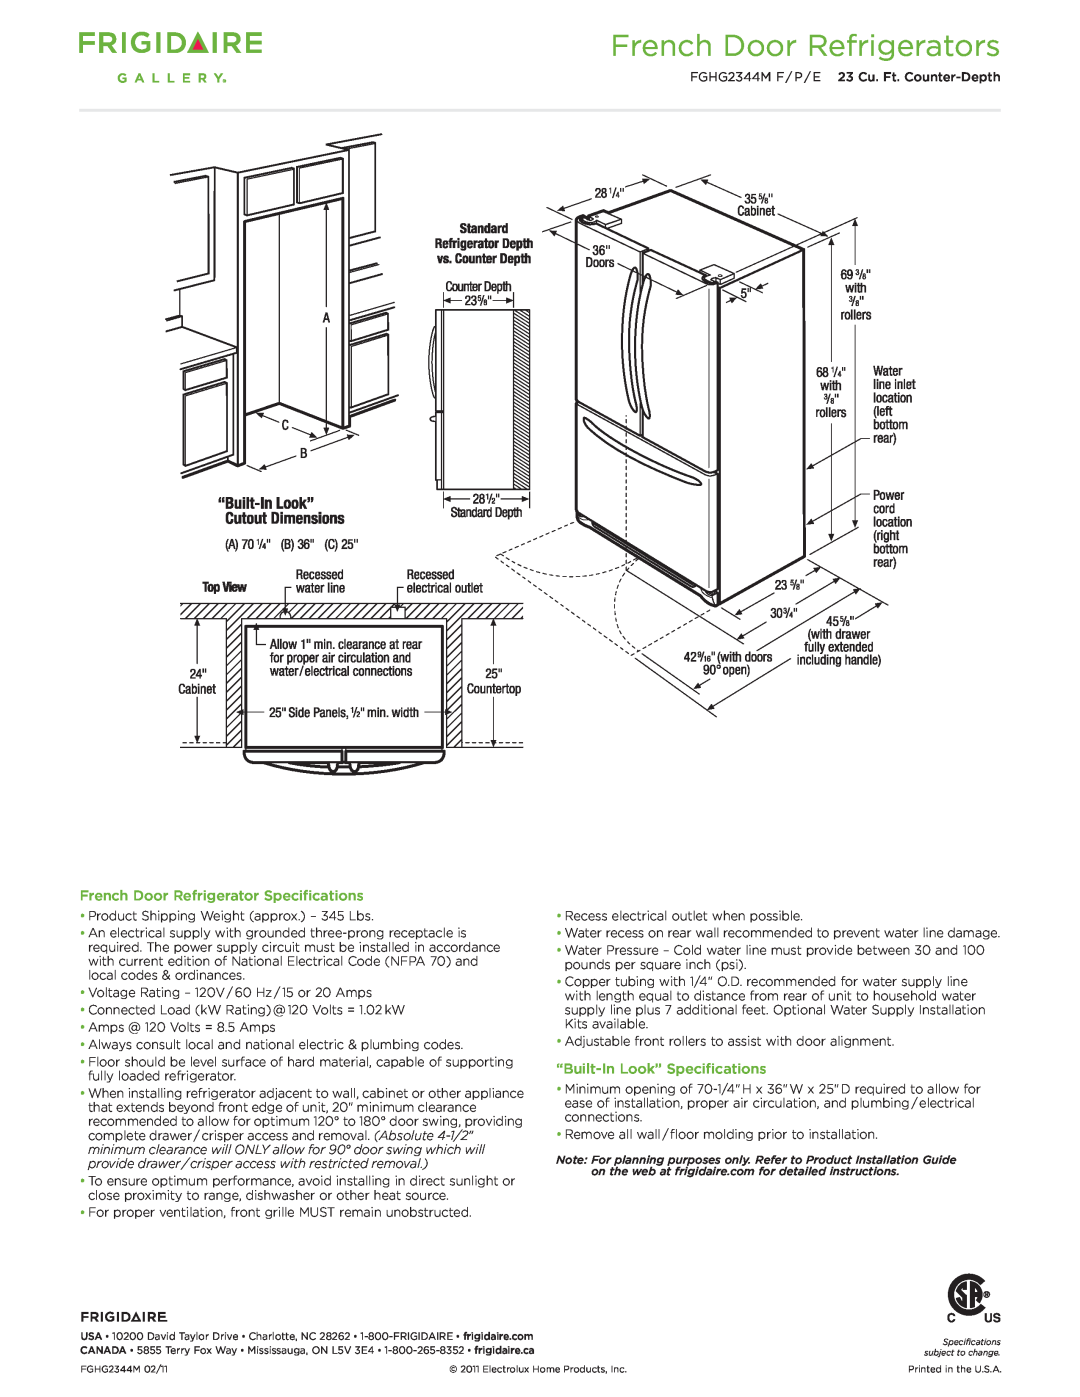 Frigidaire FGHG2344M French Door Refrigerator Specifications, “Built-InLook” Specifications, French Door Refrigerators 